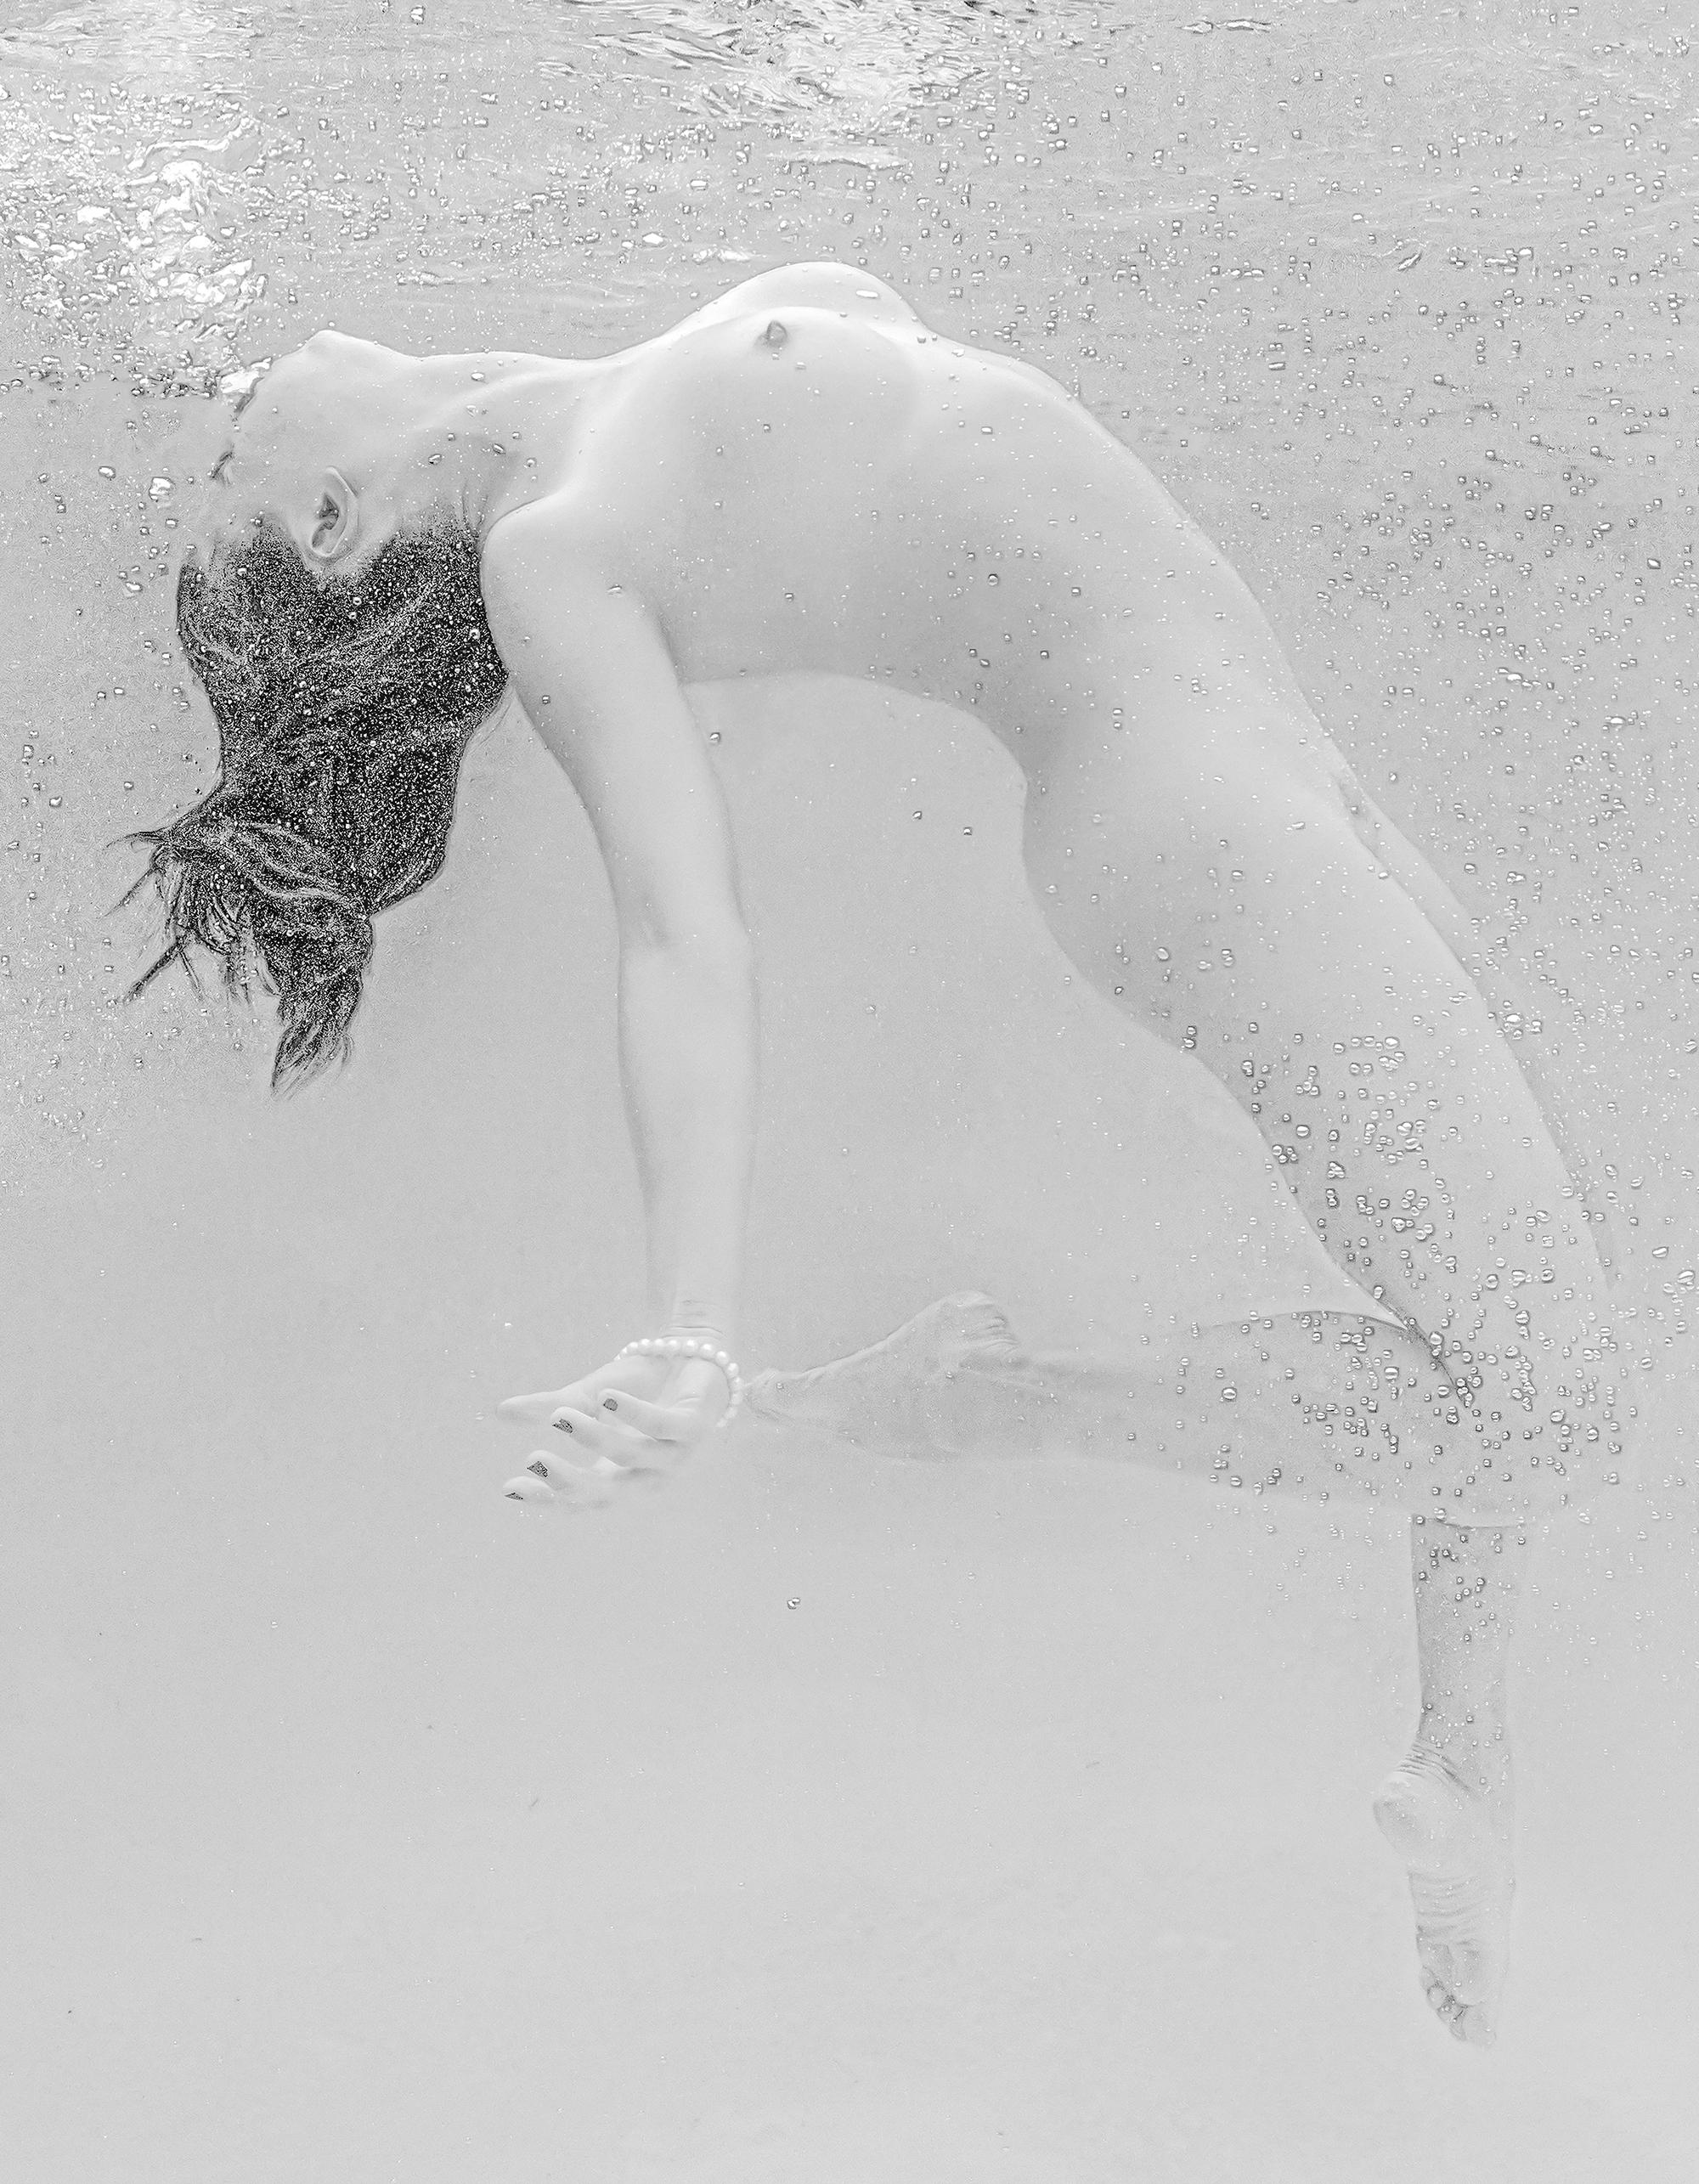 Soft Dance - underwater black & white nude photograph - archival pigment 52x35